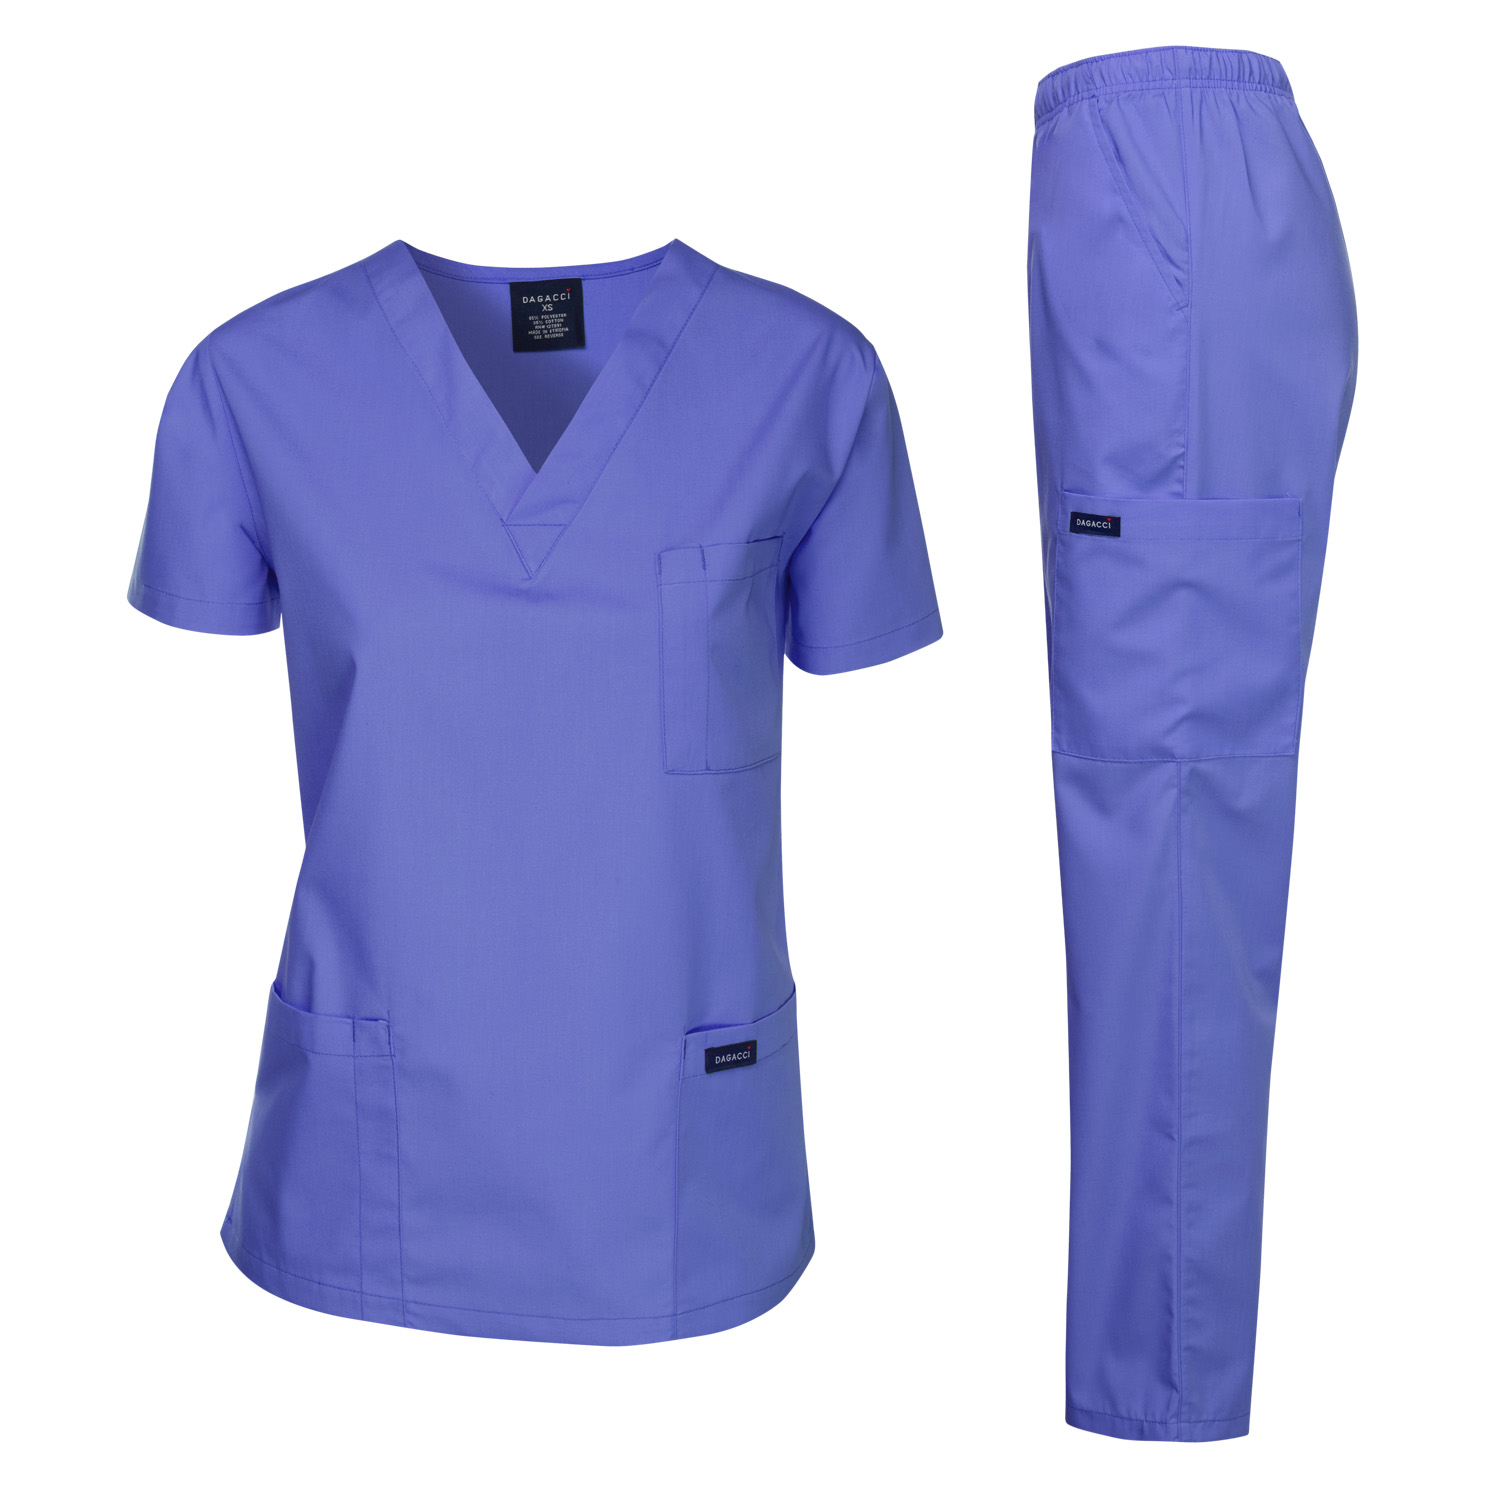 Dagacci Medical Uniform Unisex Scrubs Set Scrub Top and Pants - image 1 of 4